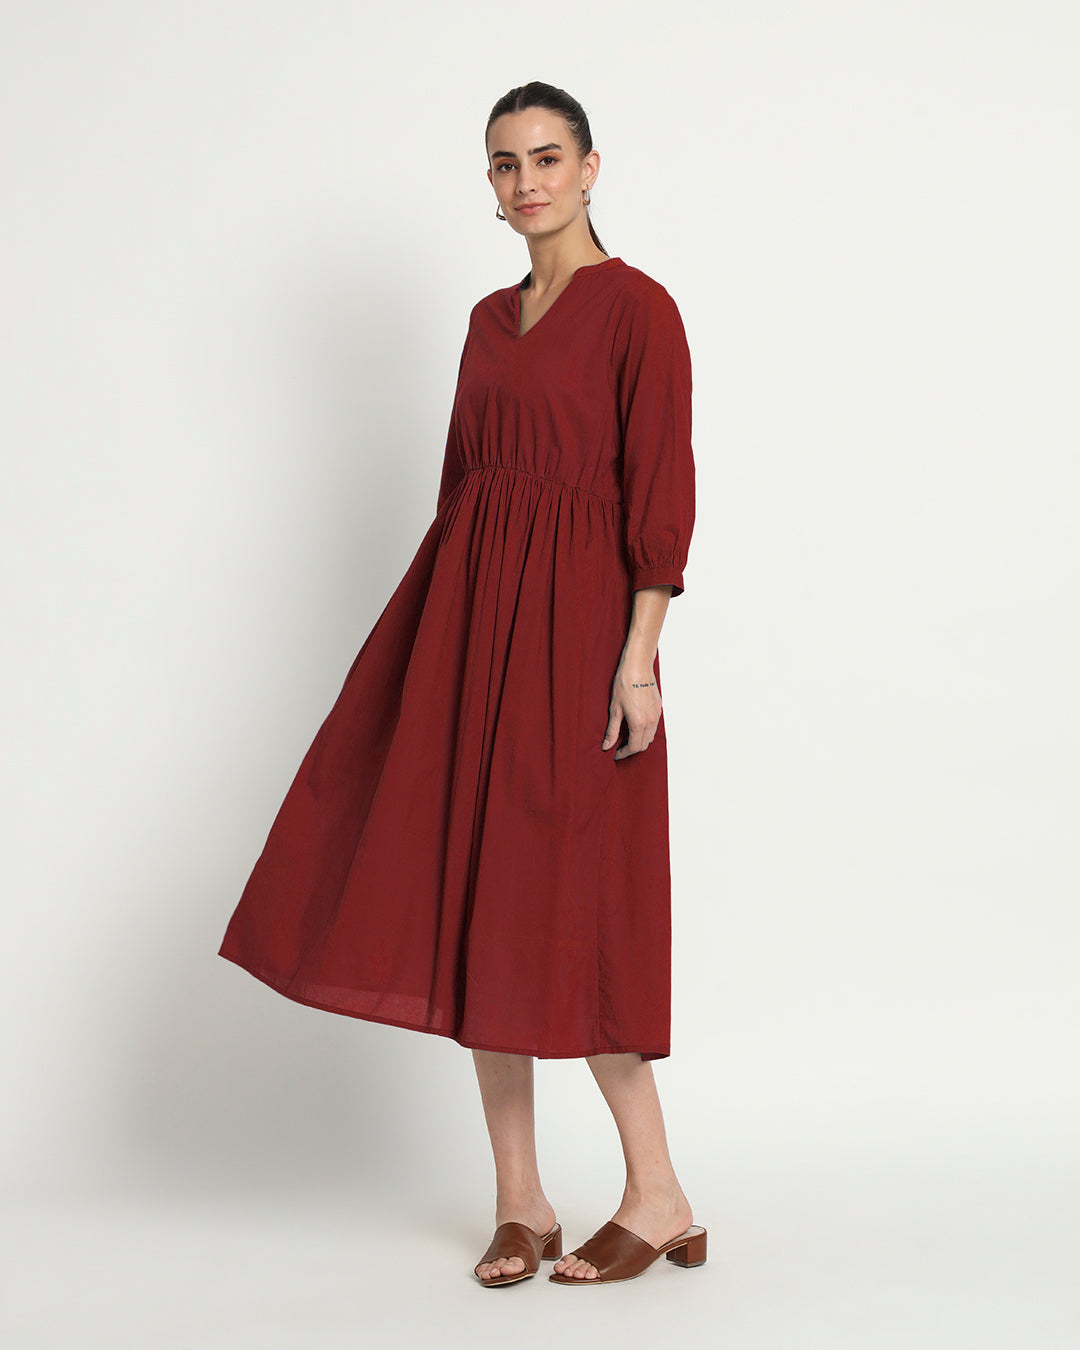 Russet Red Gathered V-Neck Stretch Dress